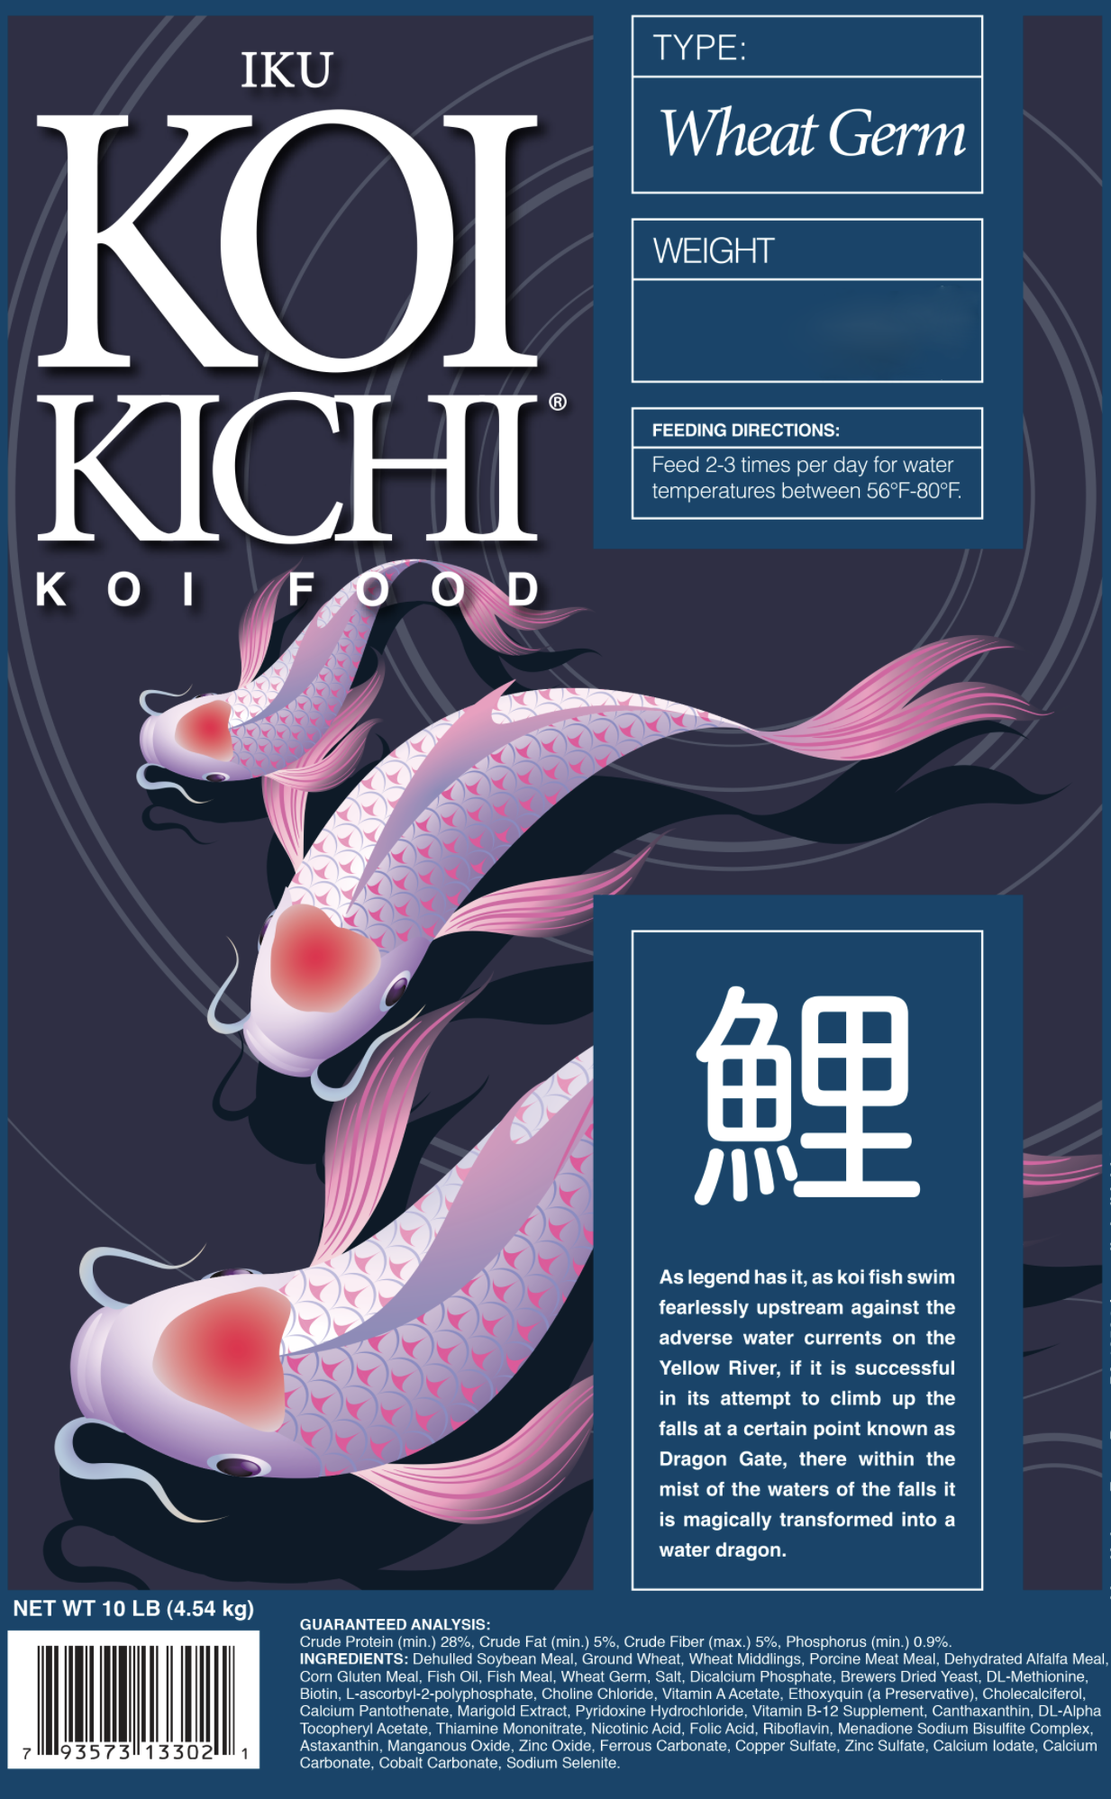 Iku Koi Kichi Wheat Germ Koi Fish Food - 5 lbs.